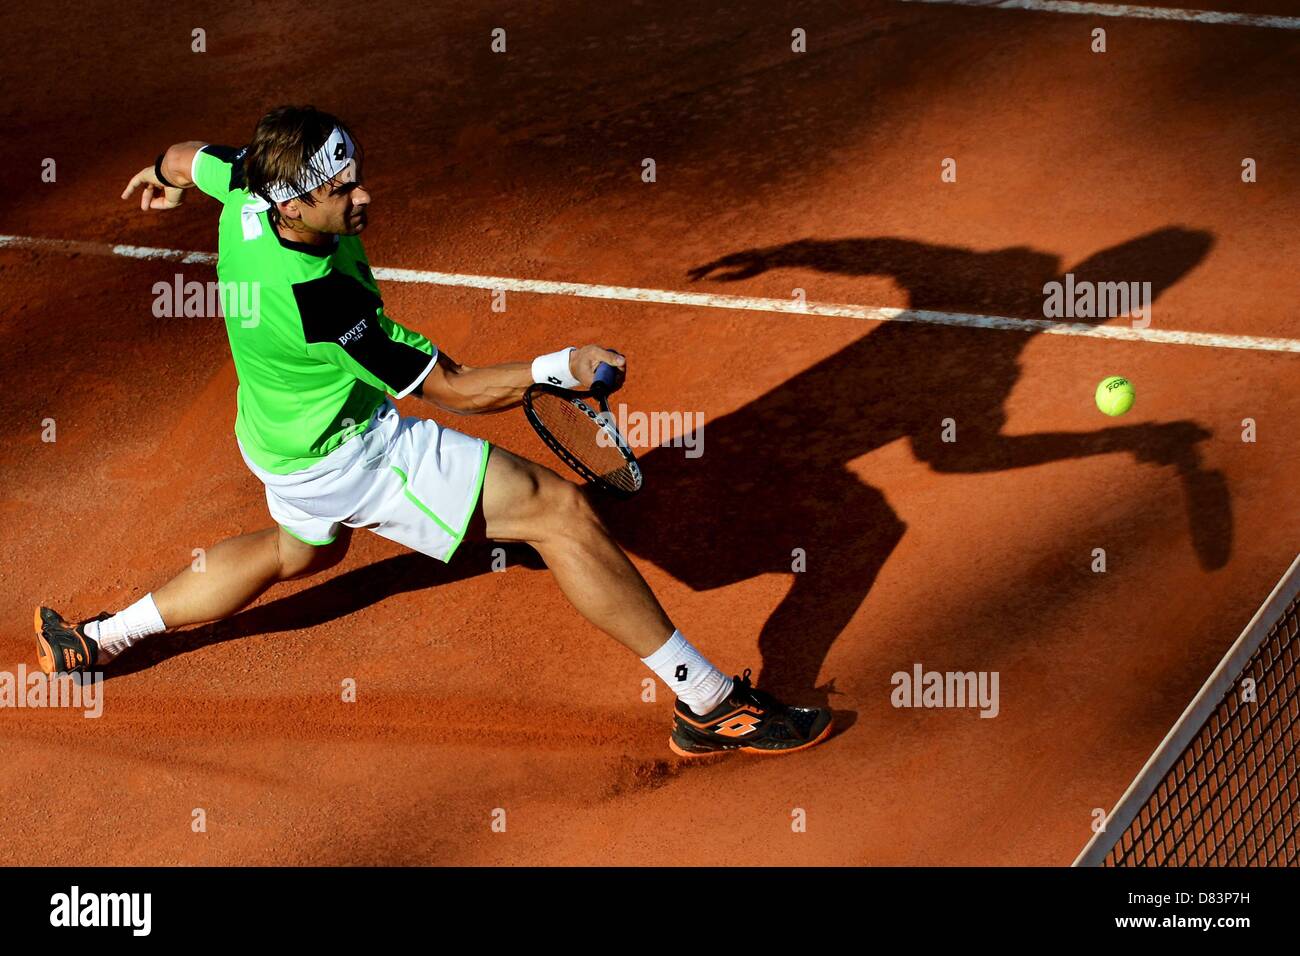 Rom, Italien. 17. Mai 2013. Foro Italico Rom Masters ATP Herren-Tennisturnier David Ferrer Spanien. Bildnachweis: Aktion Plus Sportbilder / Alamy Live News Stockfoto